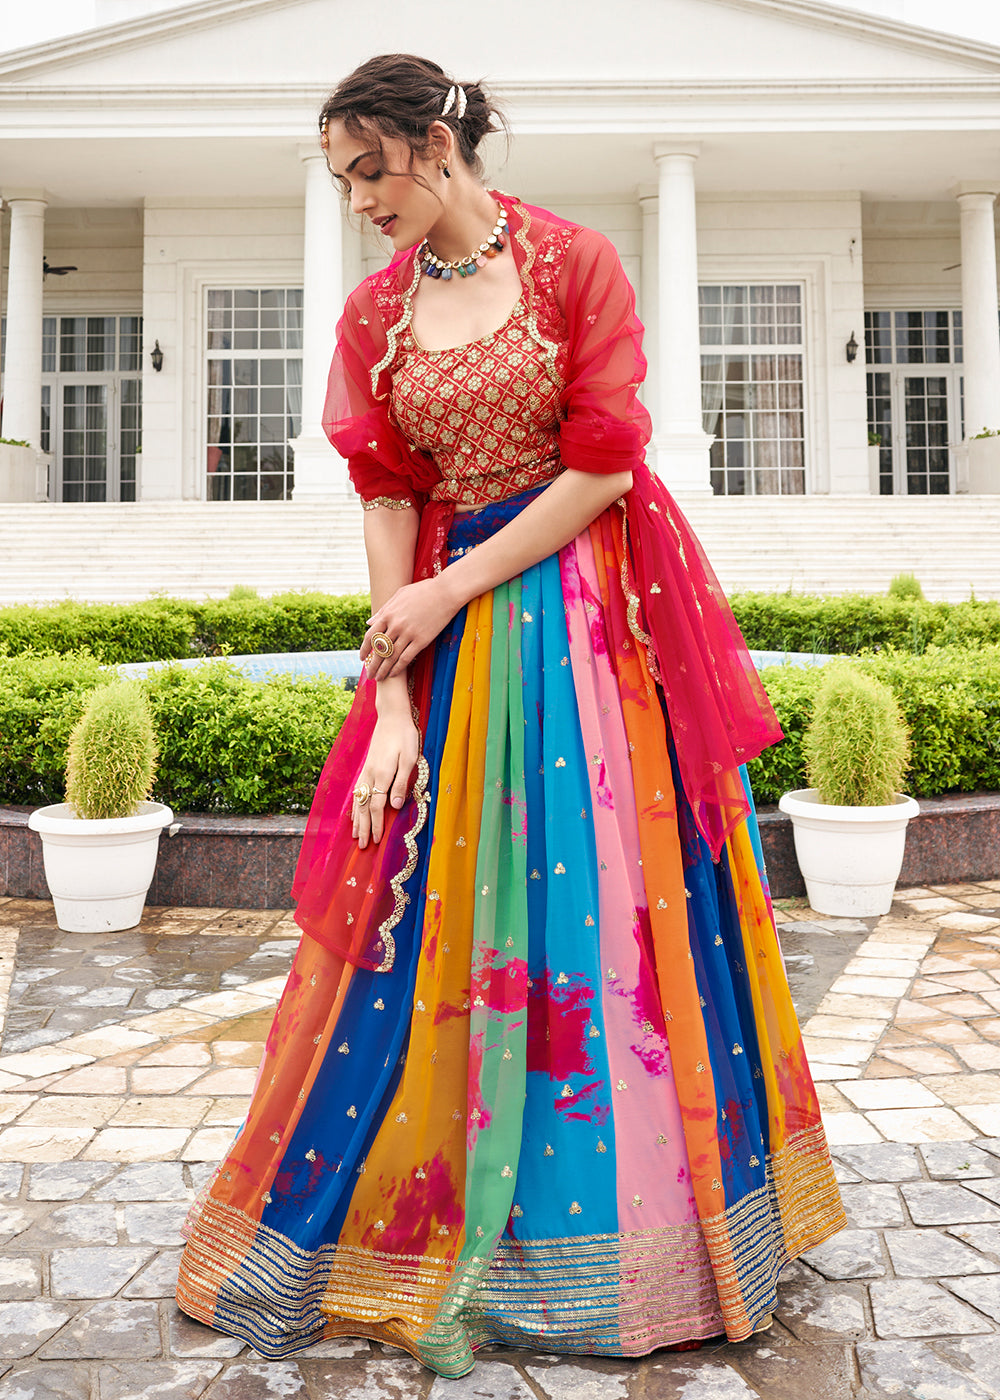 Buy Now Fascinating Multicolor Shibori Printed Wedding Lehenga Choli Online in USA, UK, Canada & Worldwide at Empress Clothing.